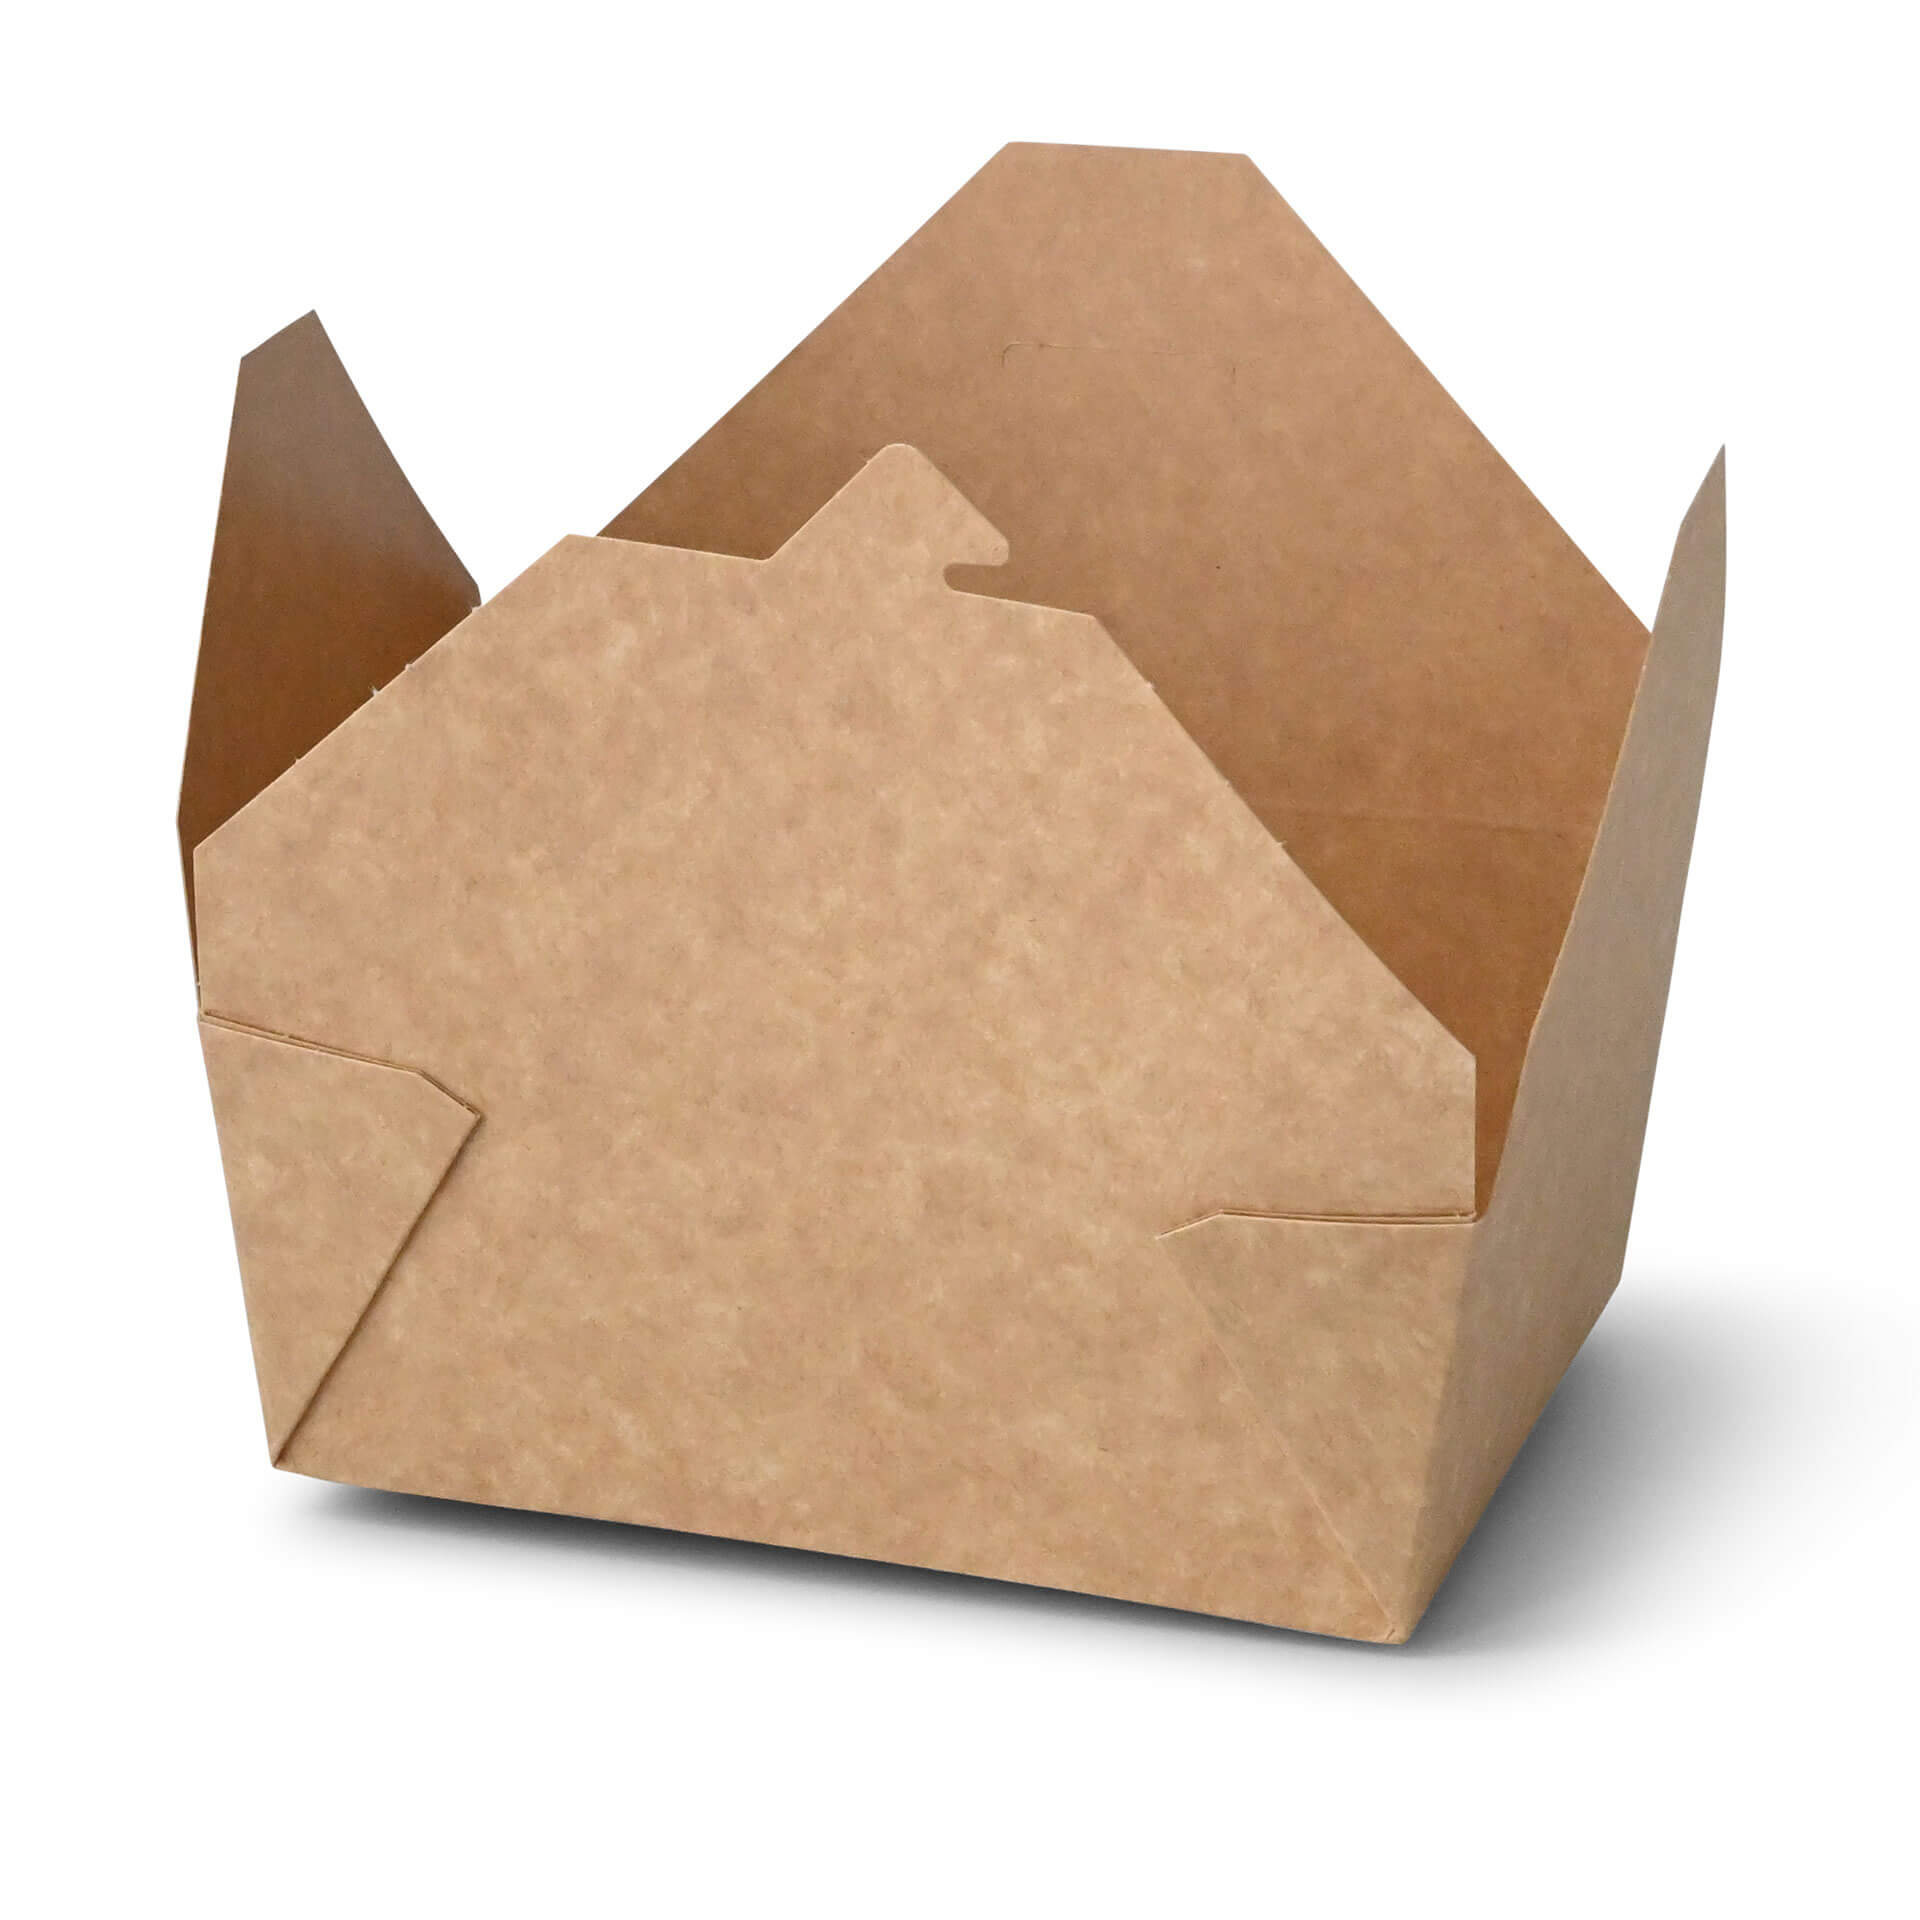 Take-away-Karton-Boxen 1150 ml, braun